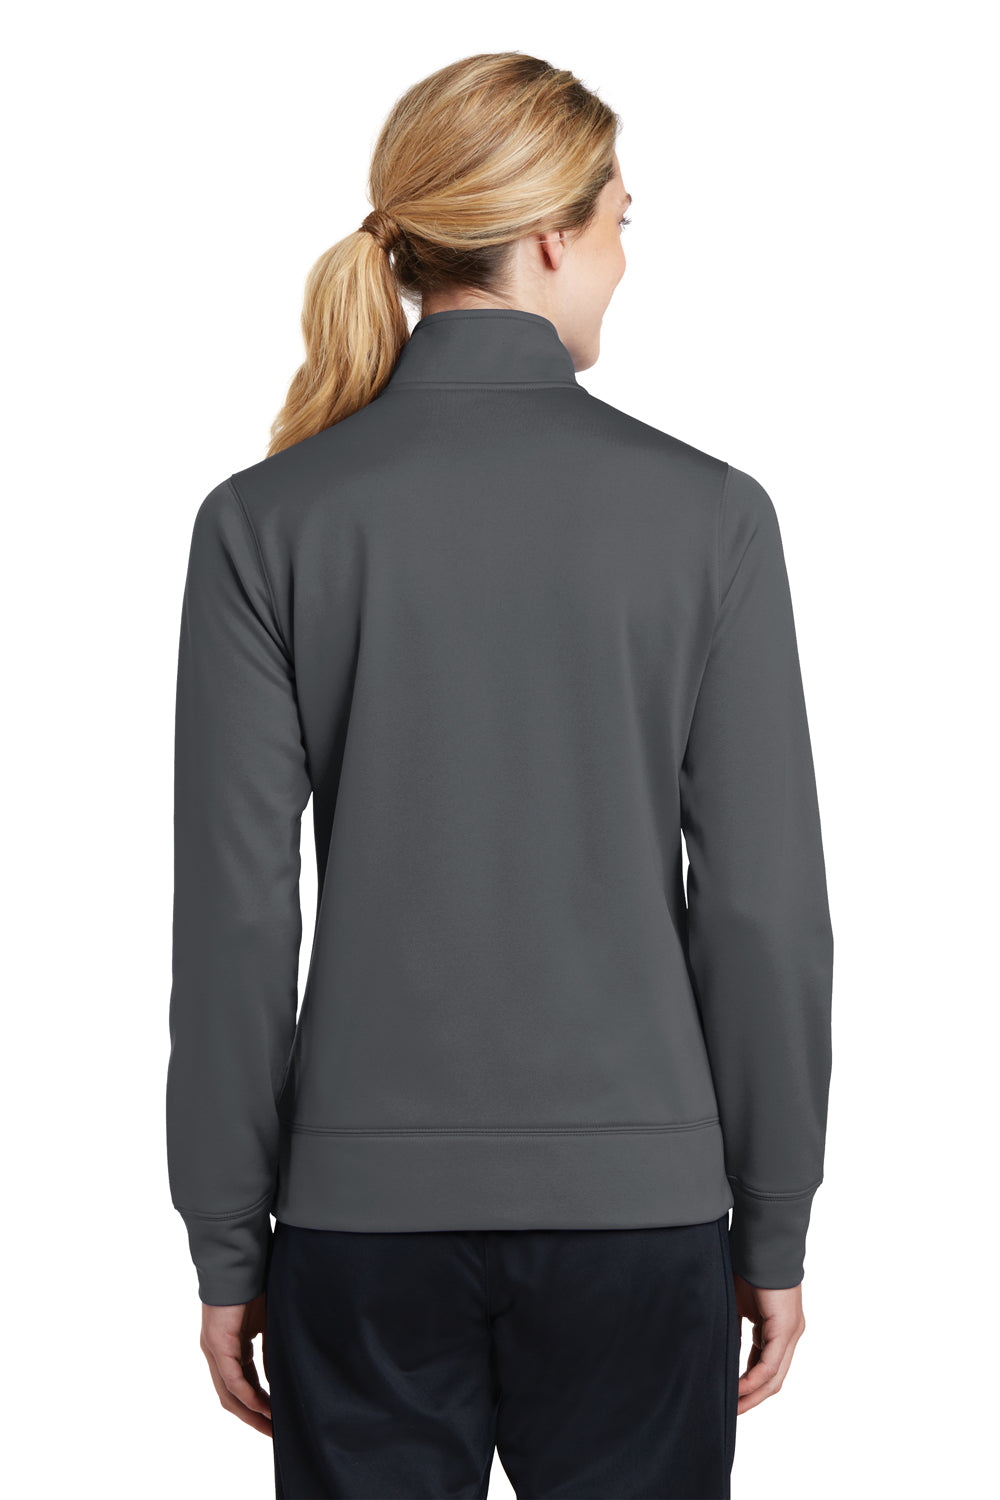 Sport-Tek LST241 Womens Sport-Wick Moisture Wicking Fleece Full Zip Sweatshirt Dark Grey Back